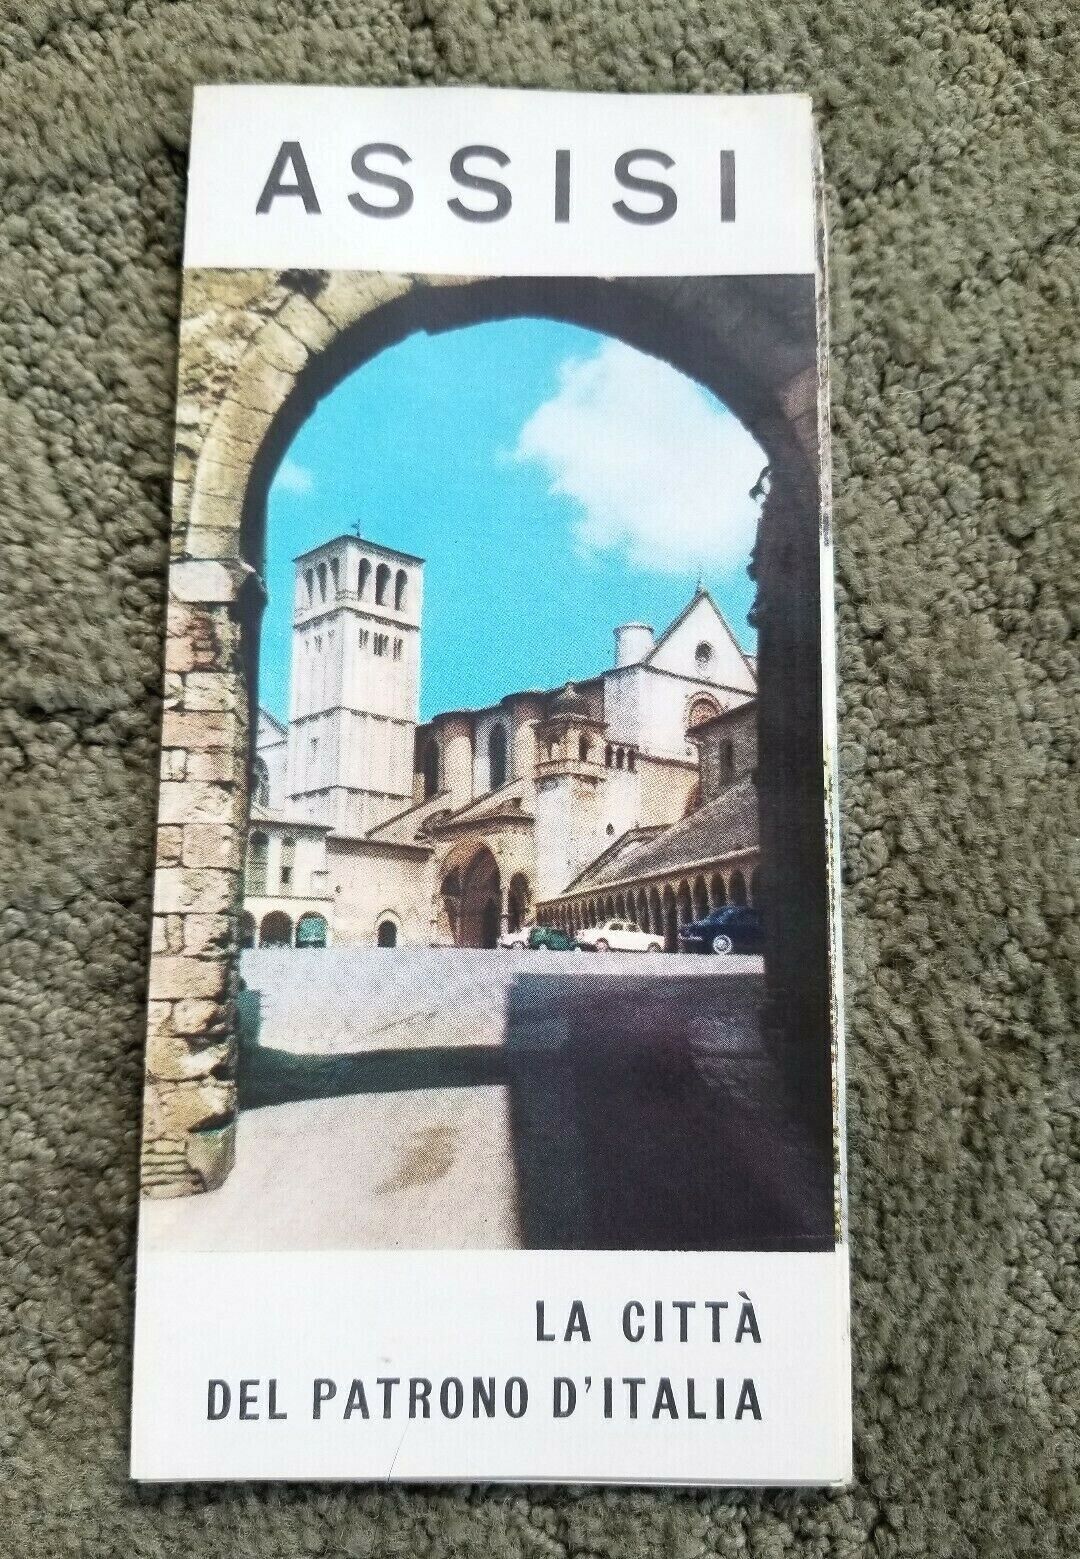 Vintage 1960s Italy Travel Brochure - ASSISI  English / Italian Text